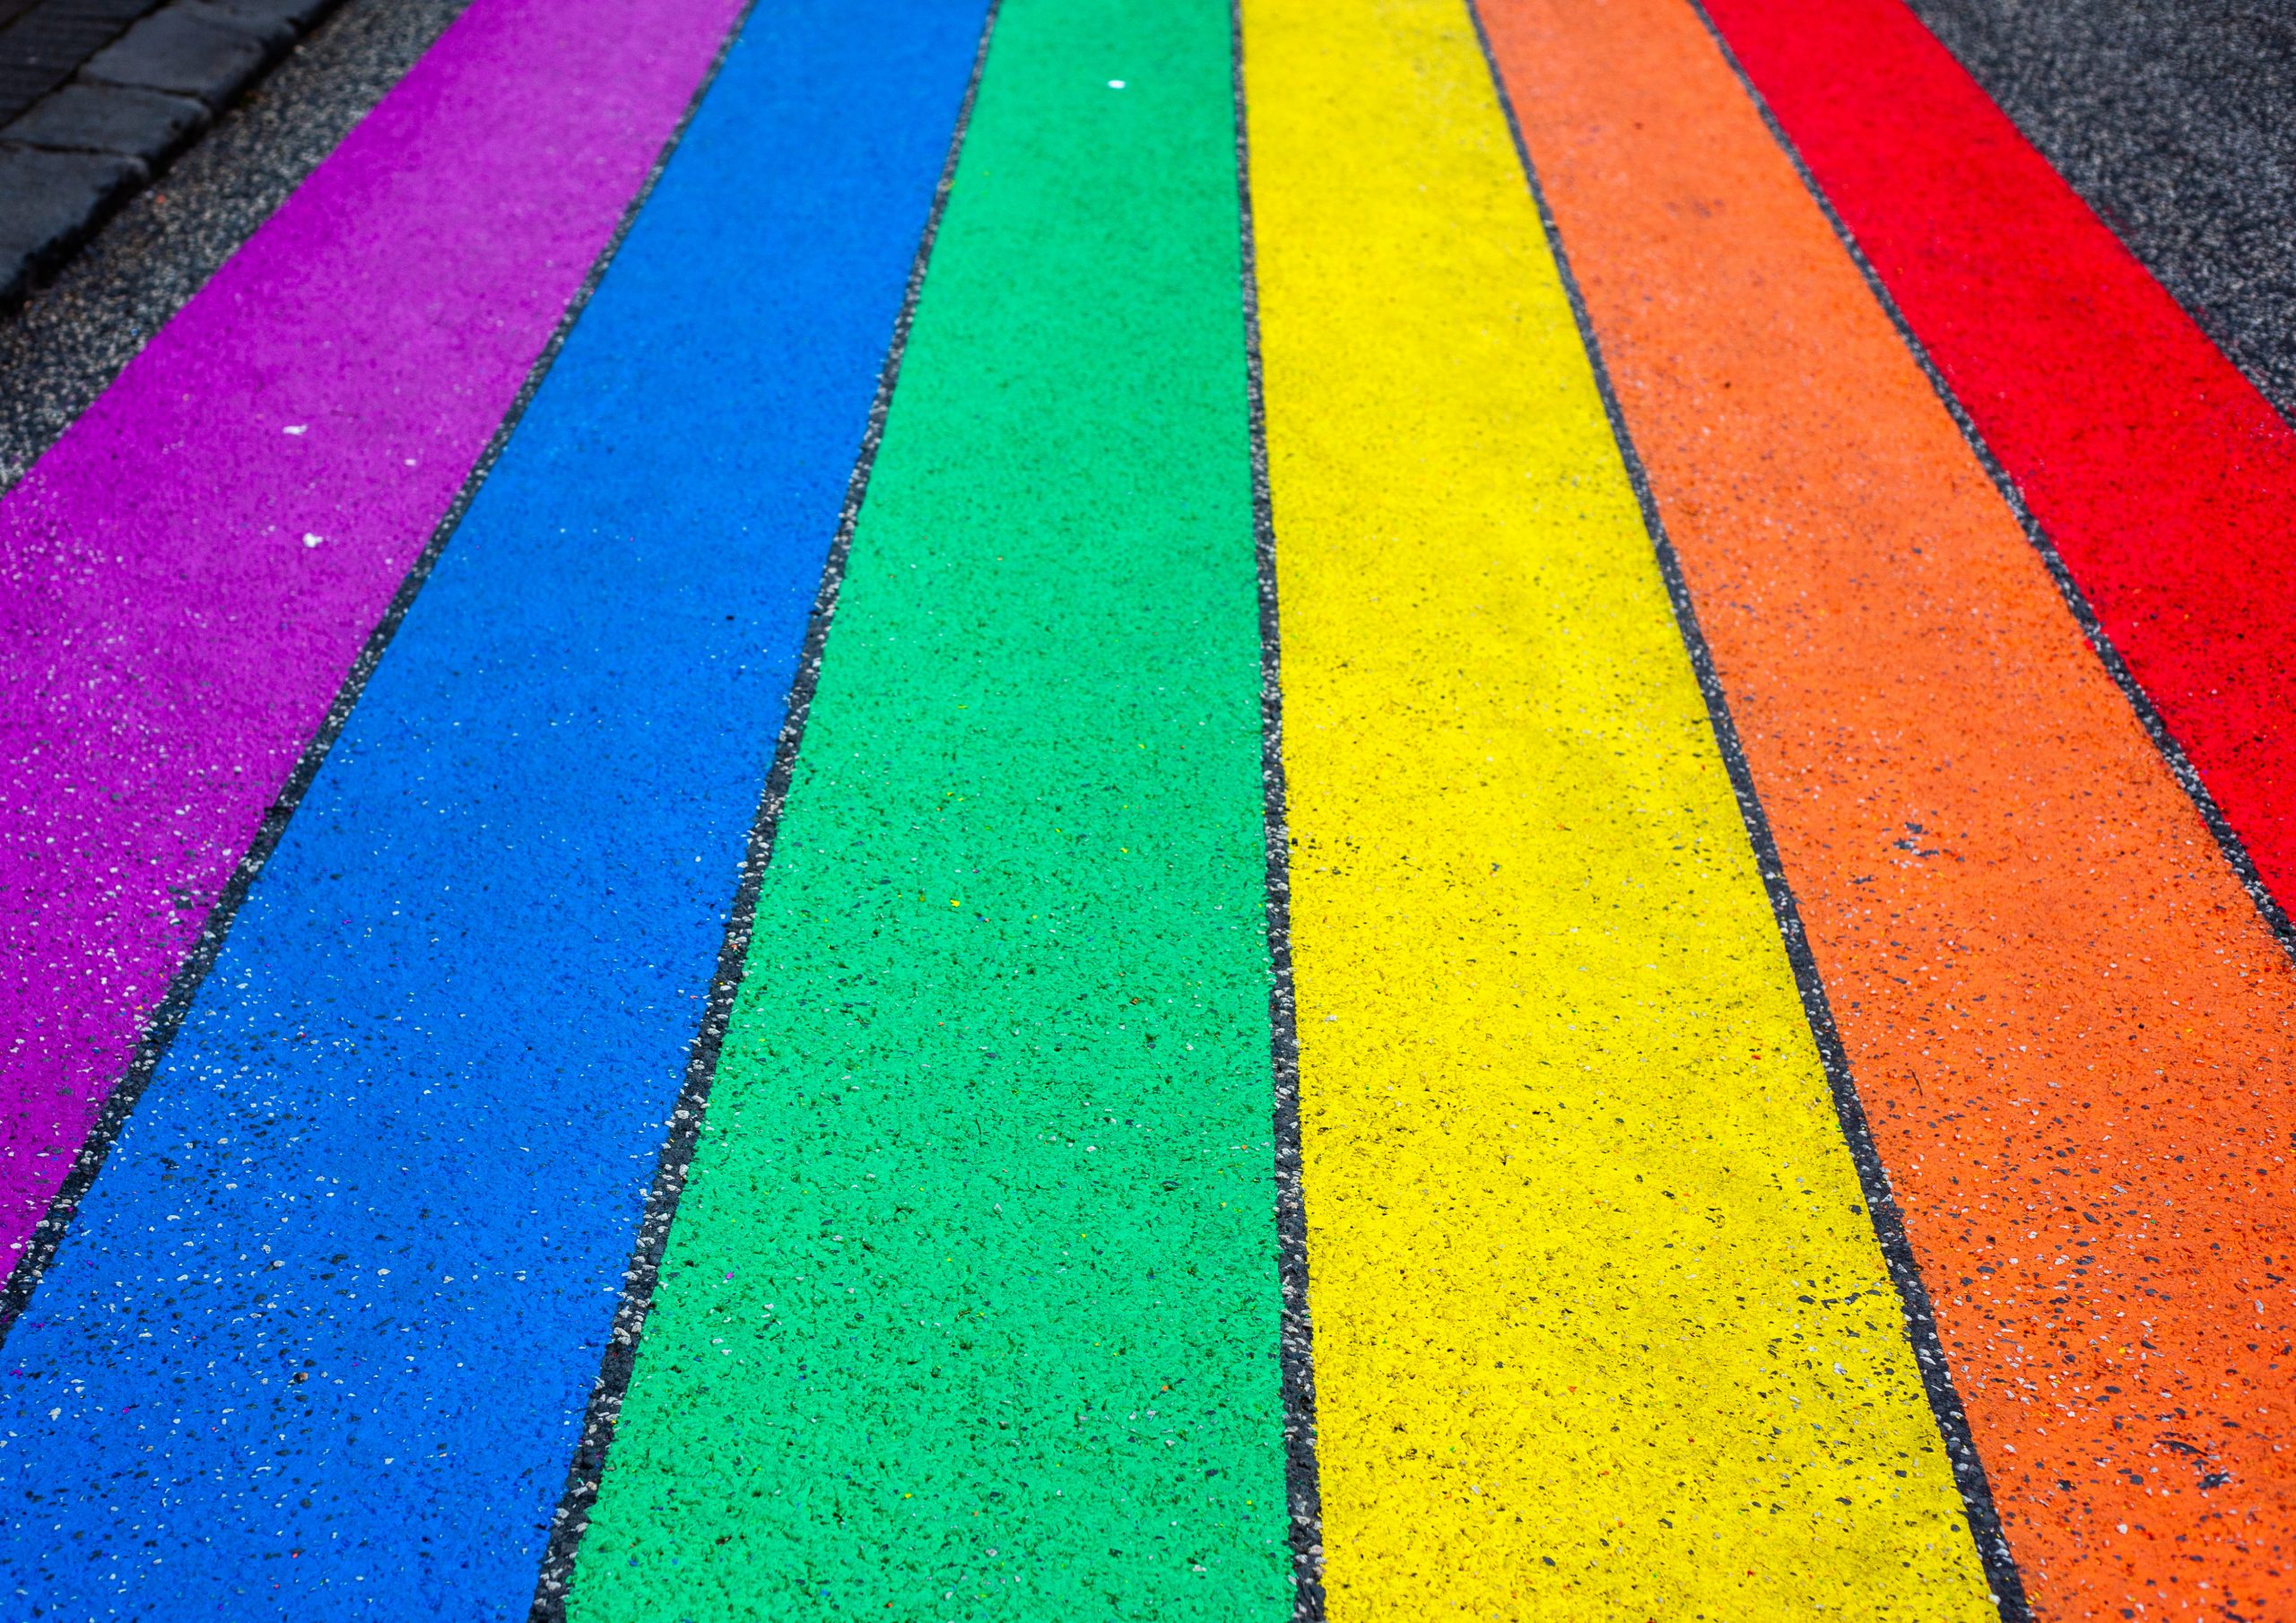 Photograph of rainbow stripes painted on asphalt